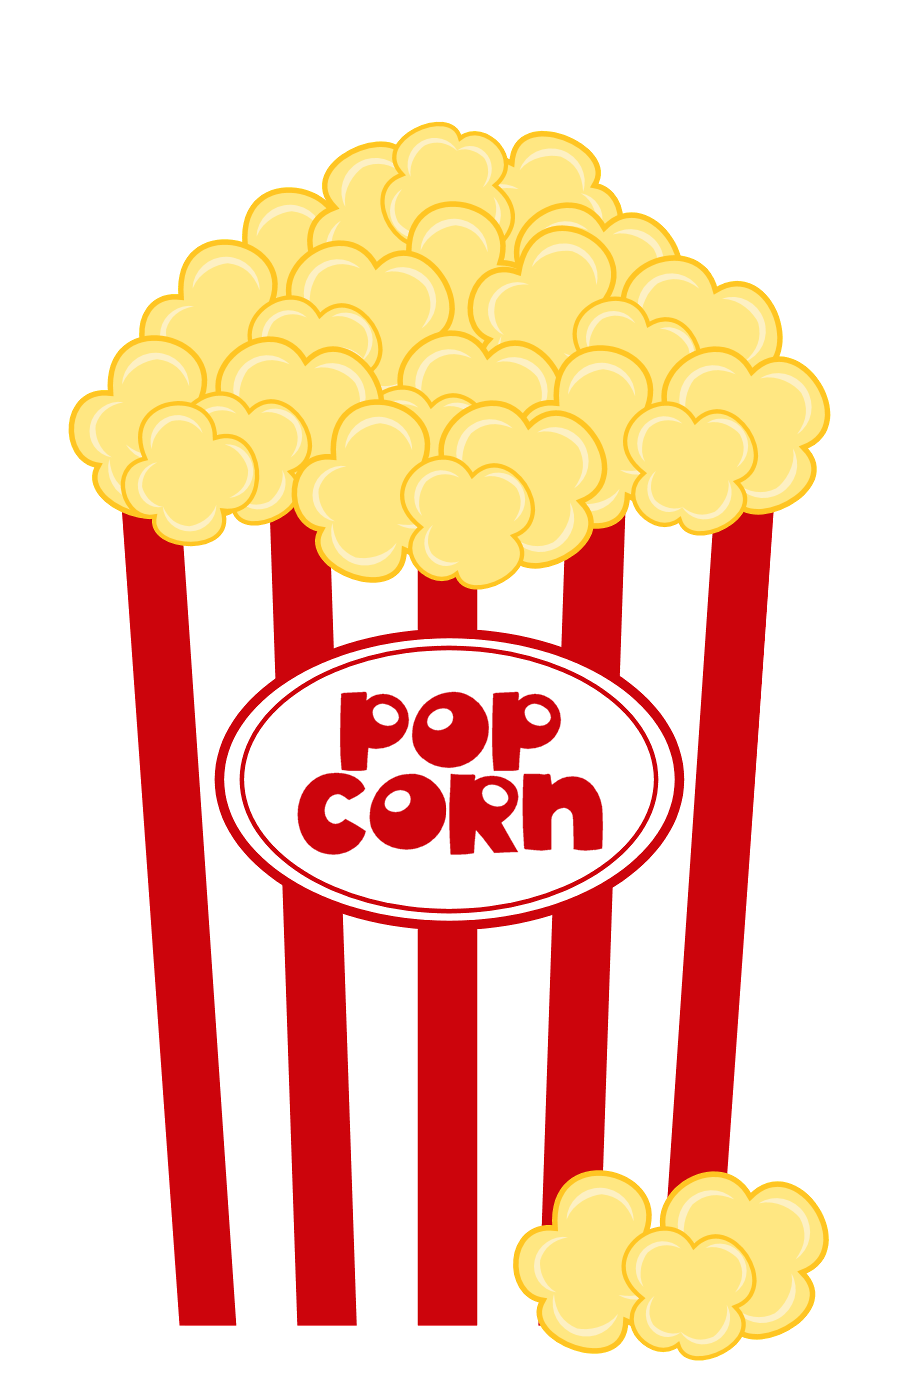 Tv and popcorn